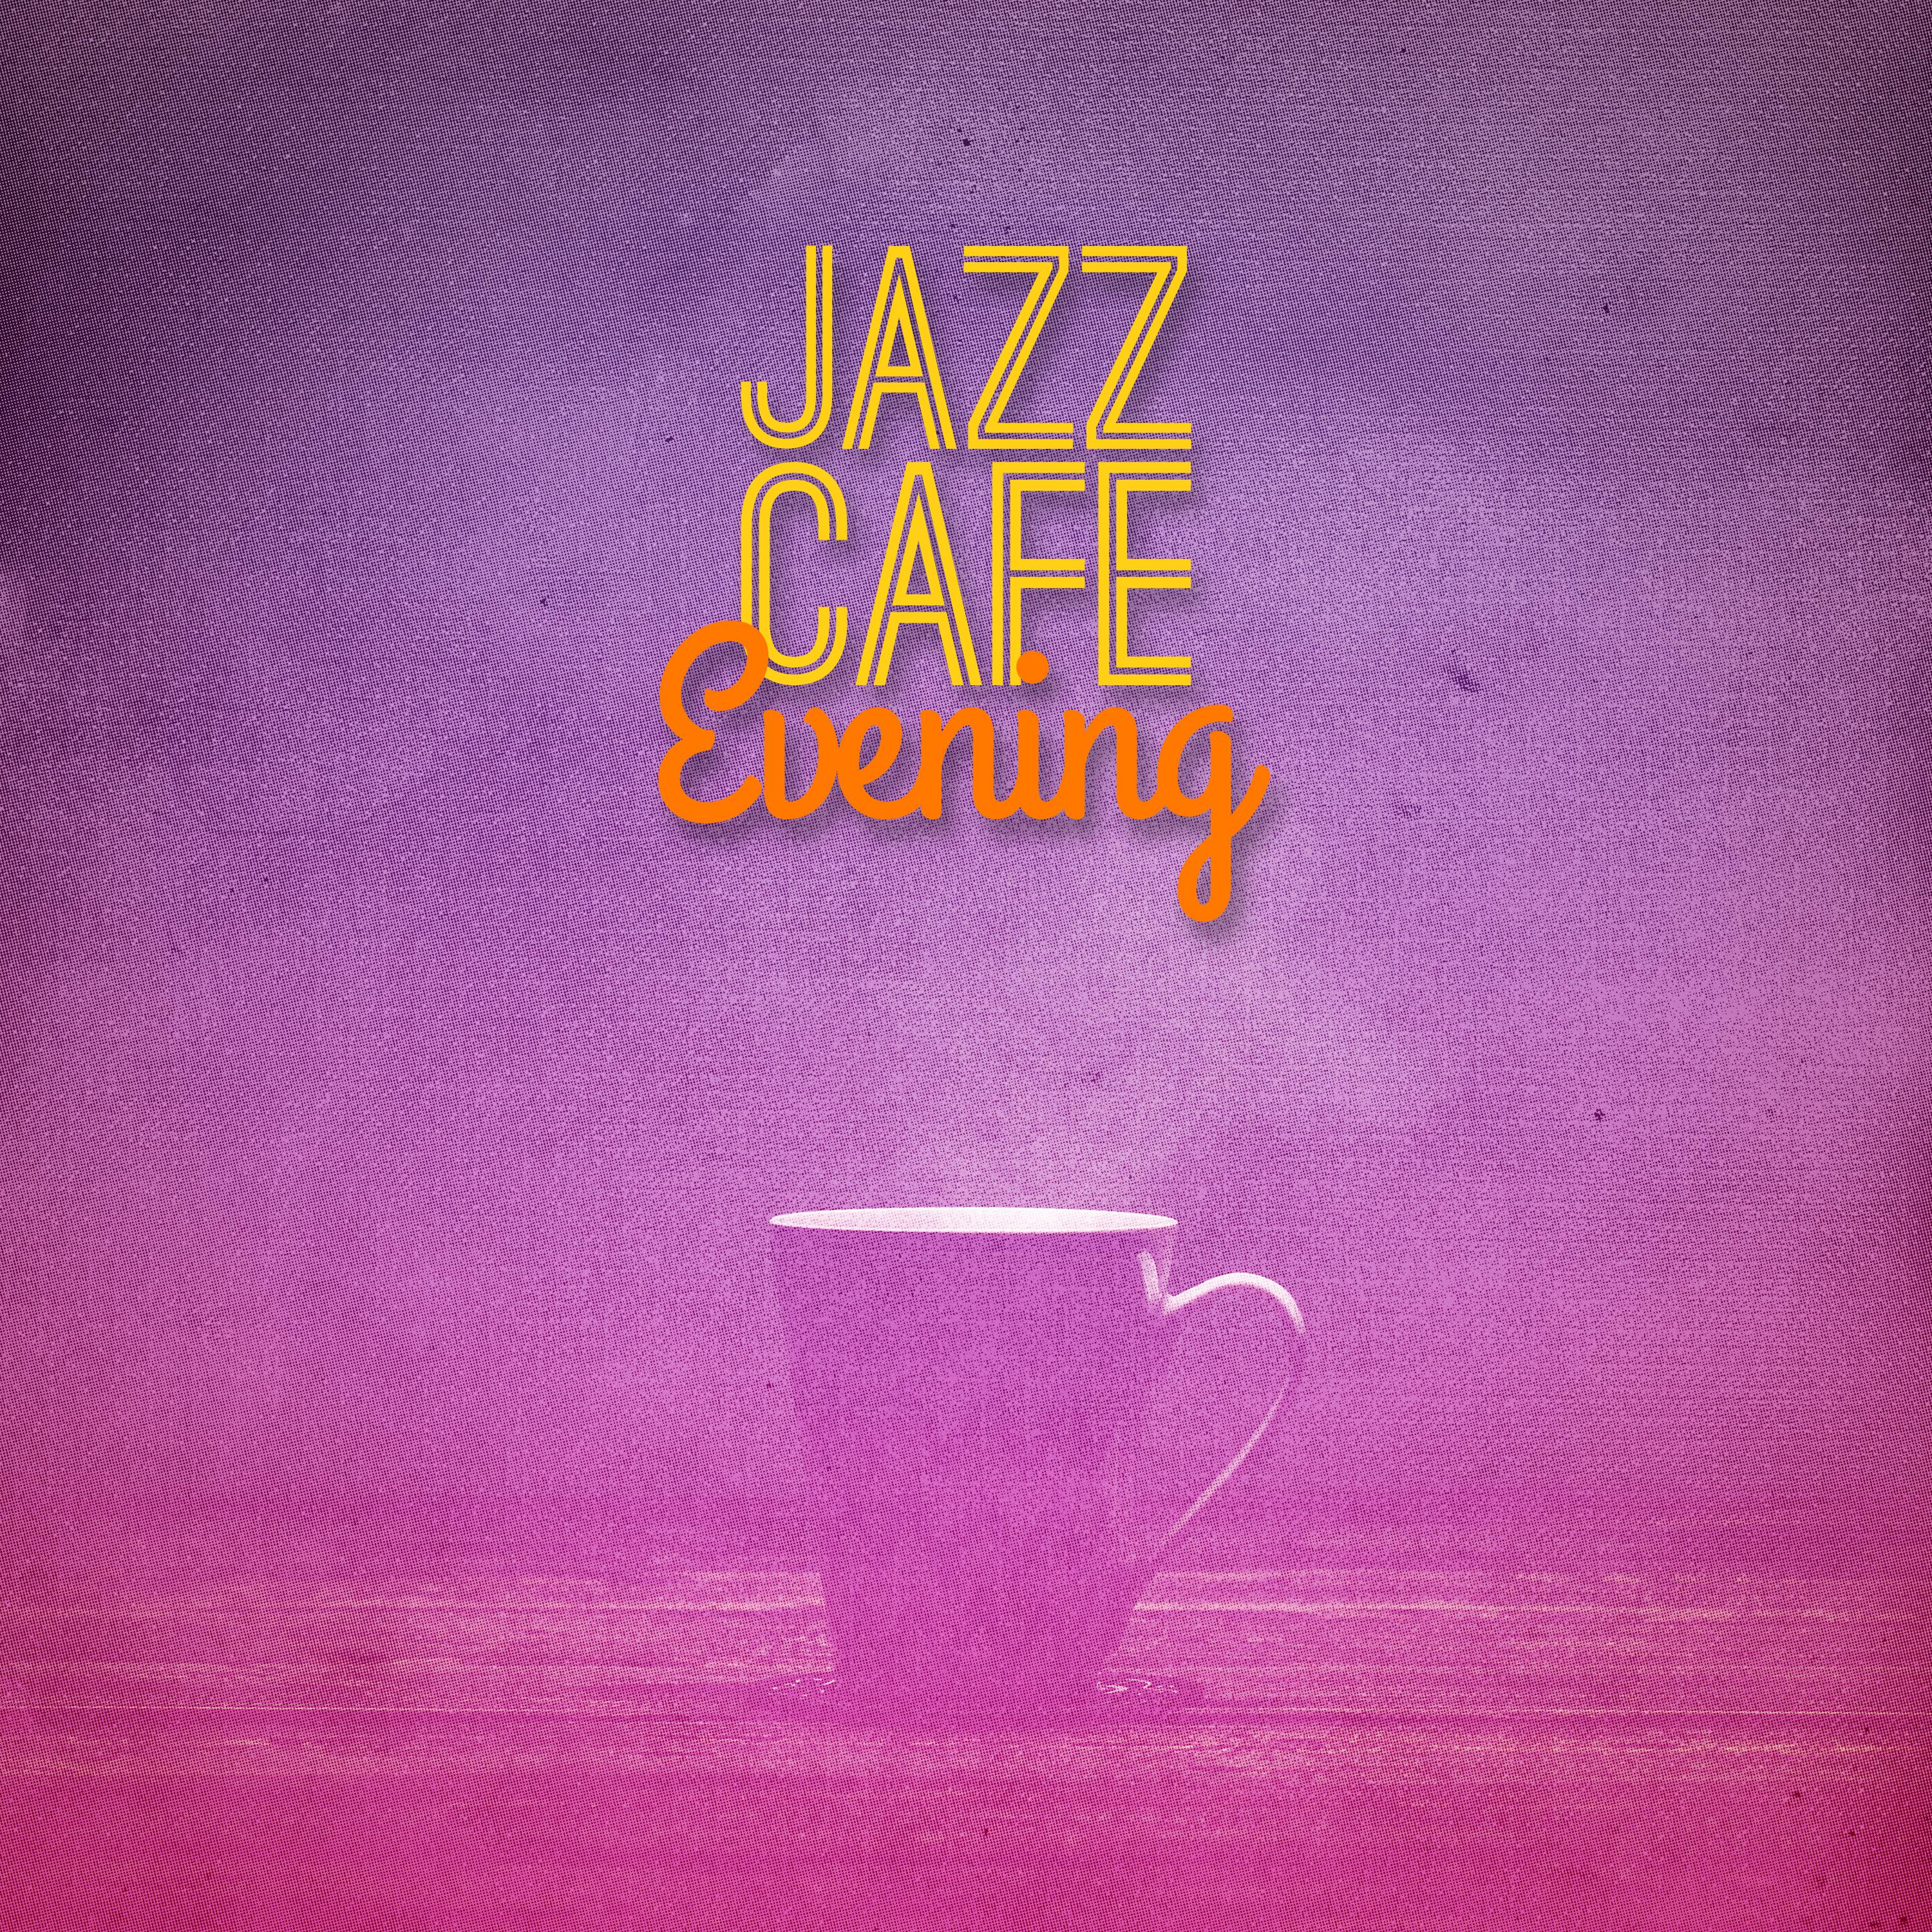 Jazz Cafe Evening